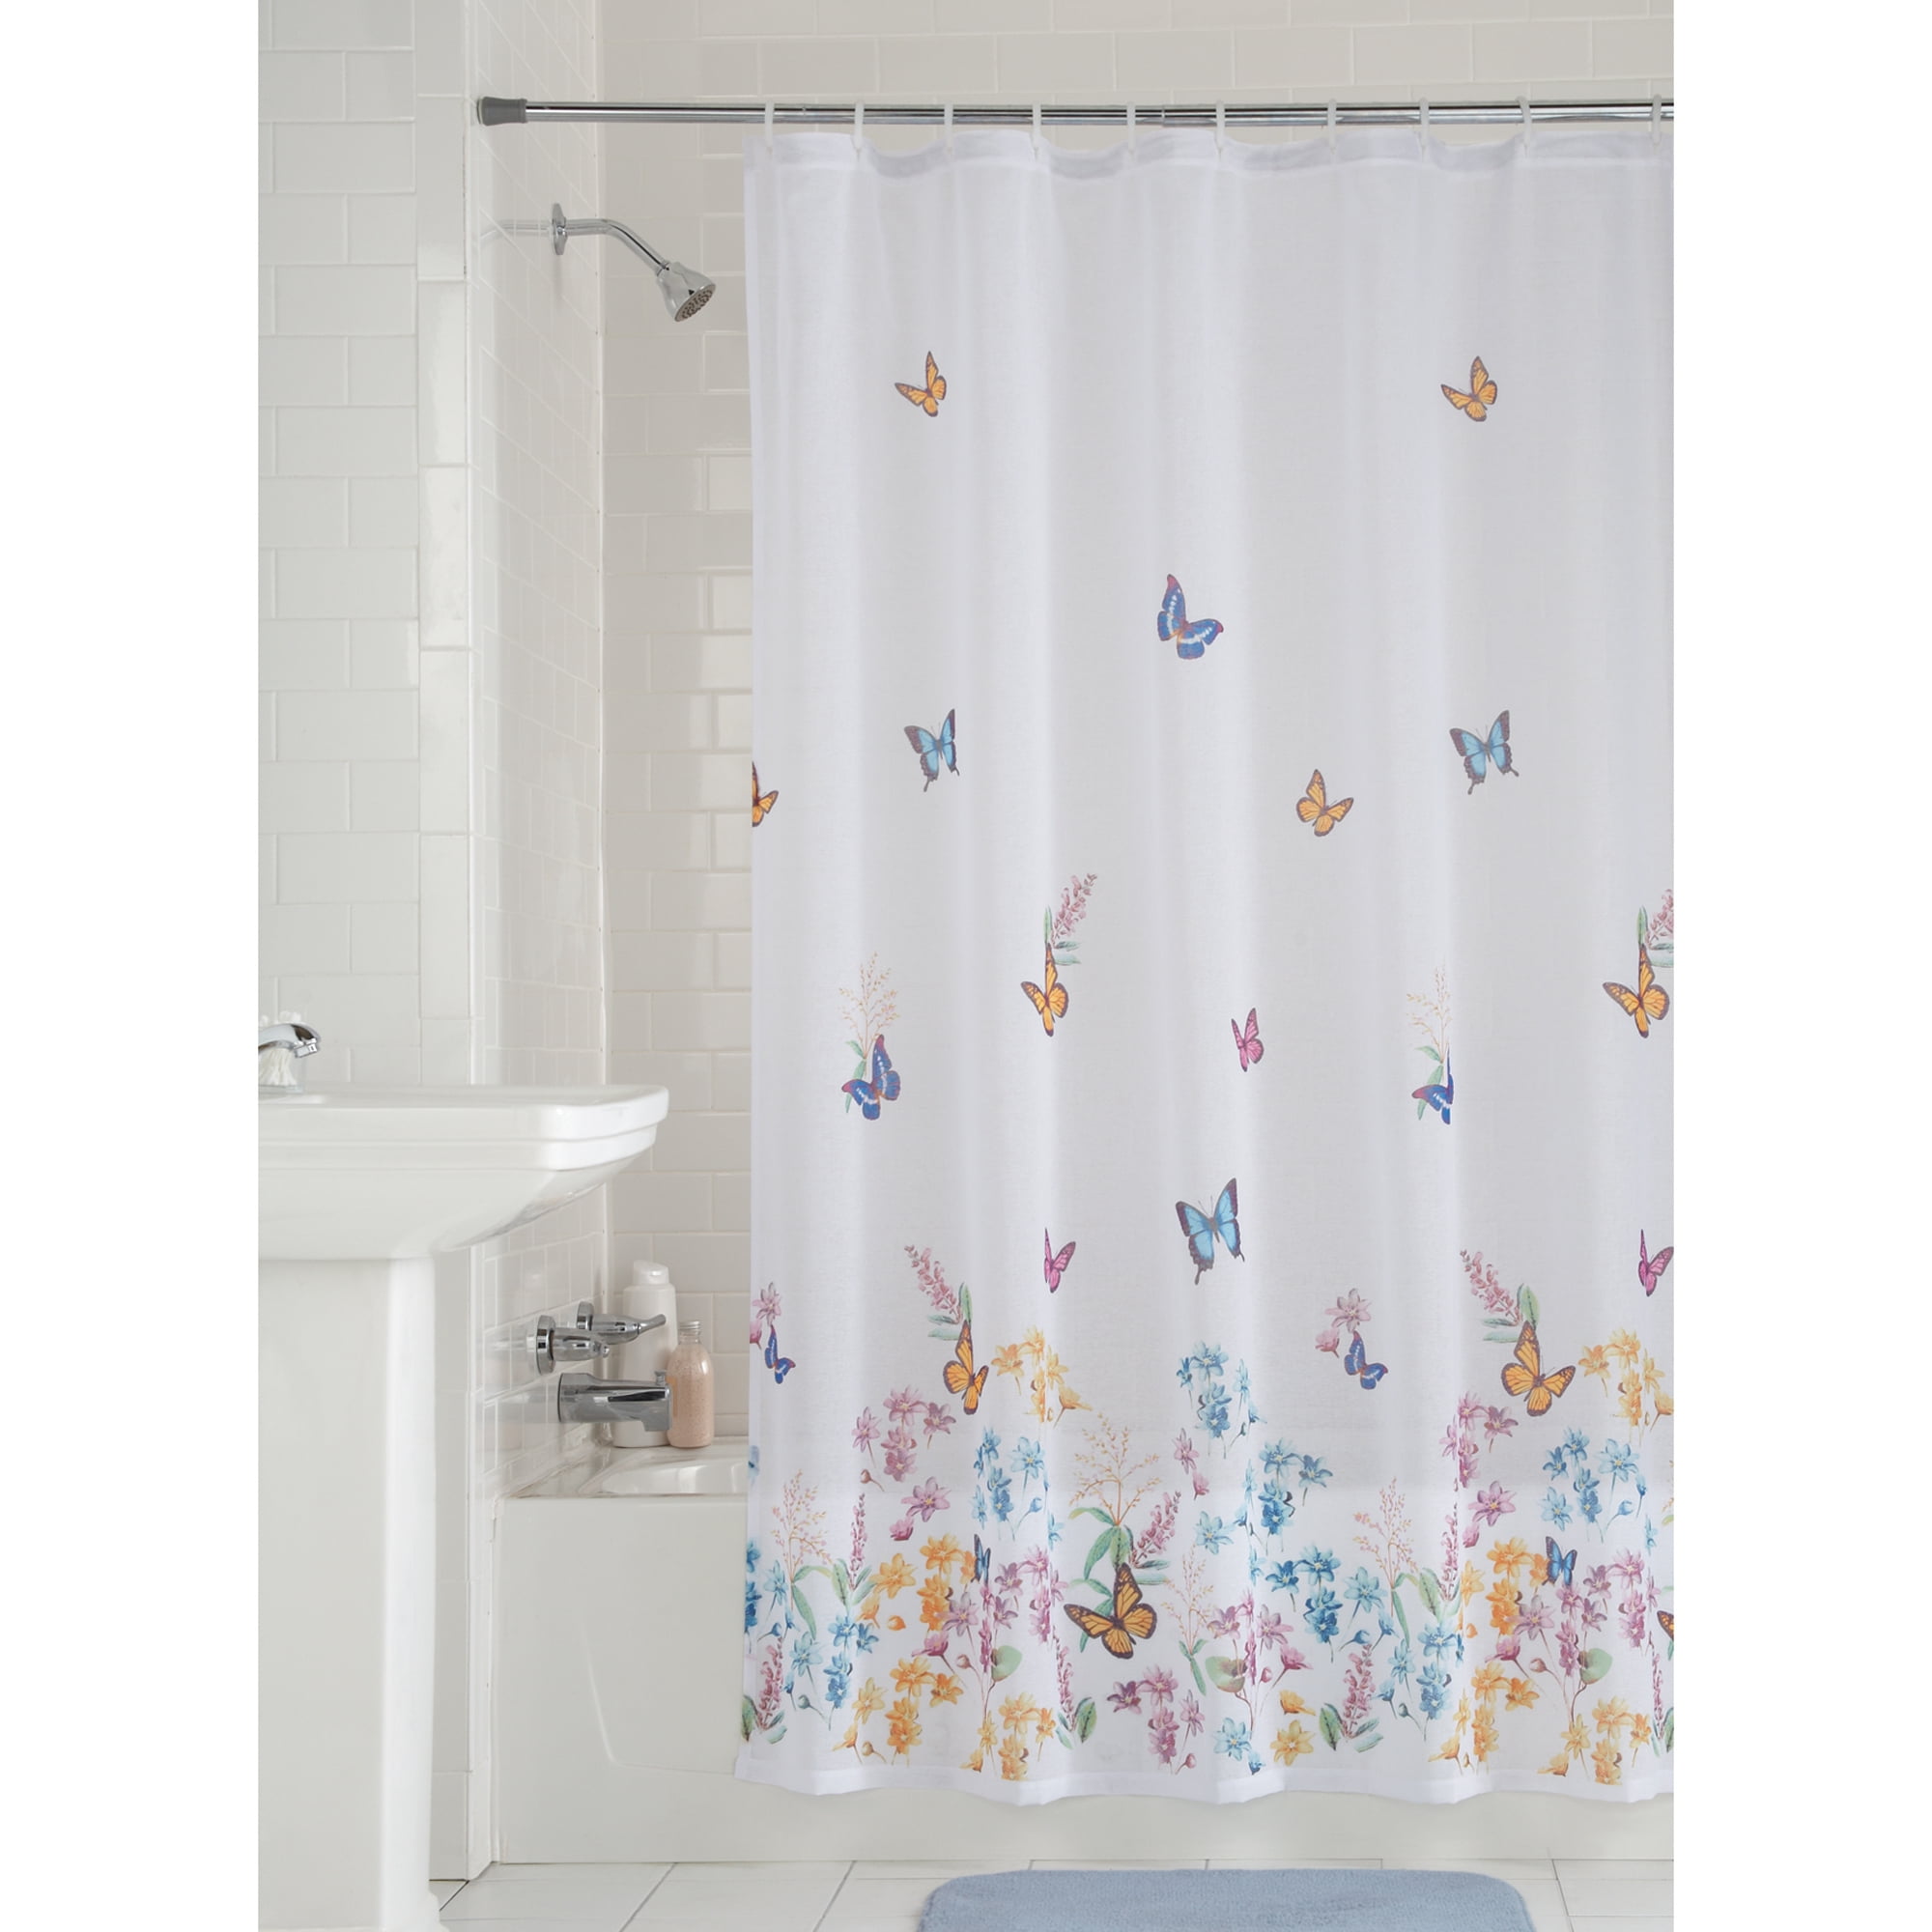 Details about   Butterfly Shower Curtain Bathroom Plastic Waterproof Mildew Splash Resistant  